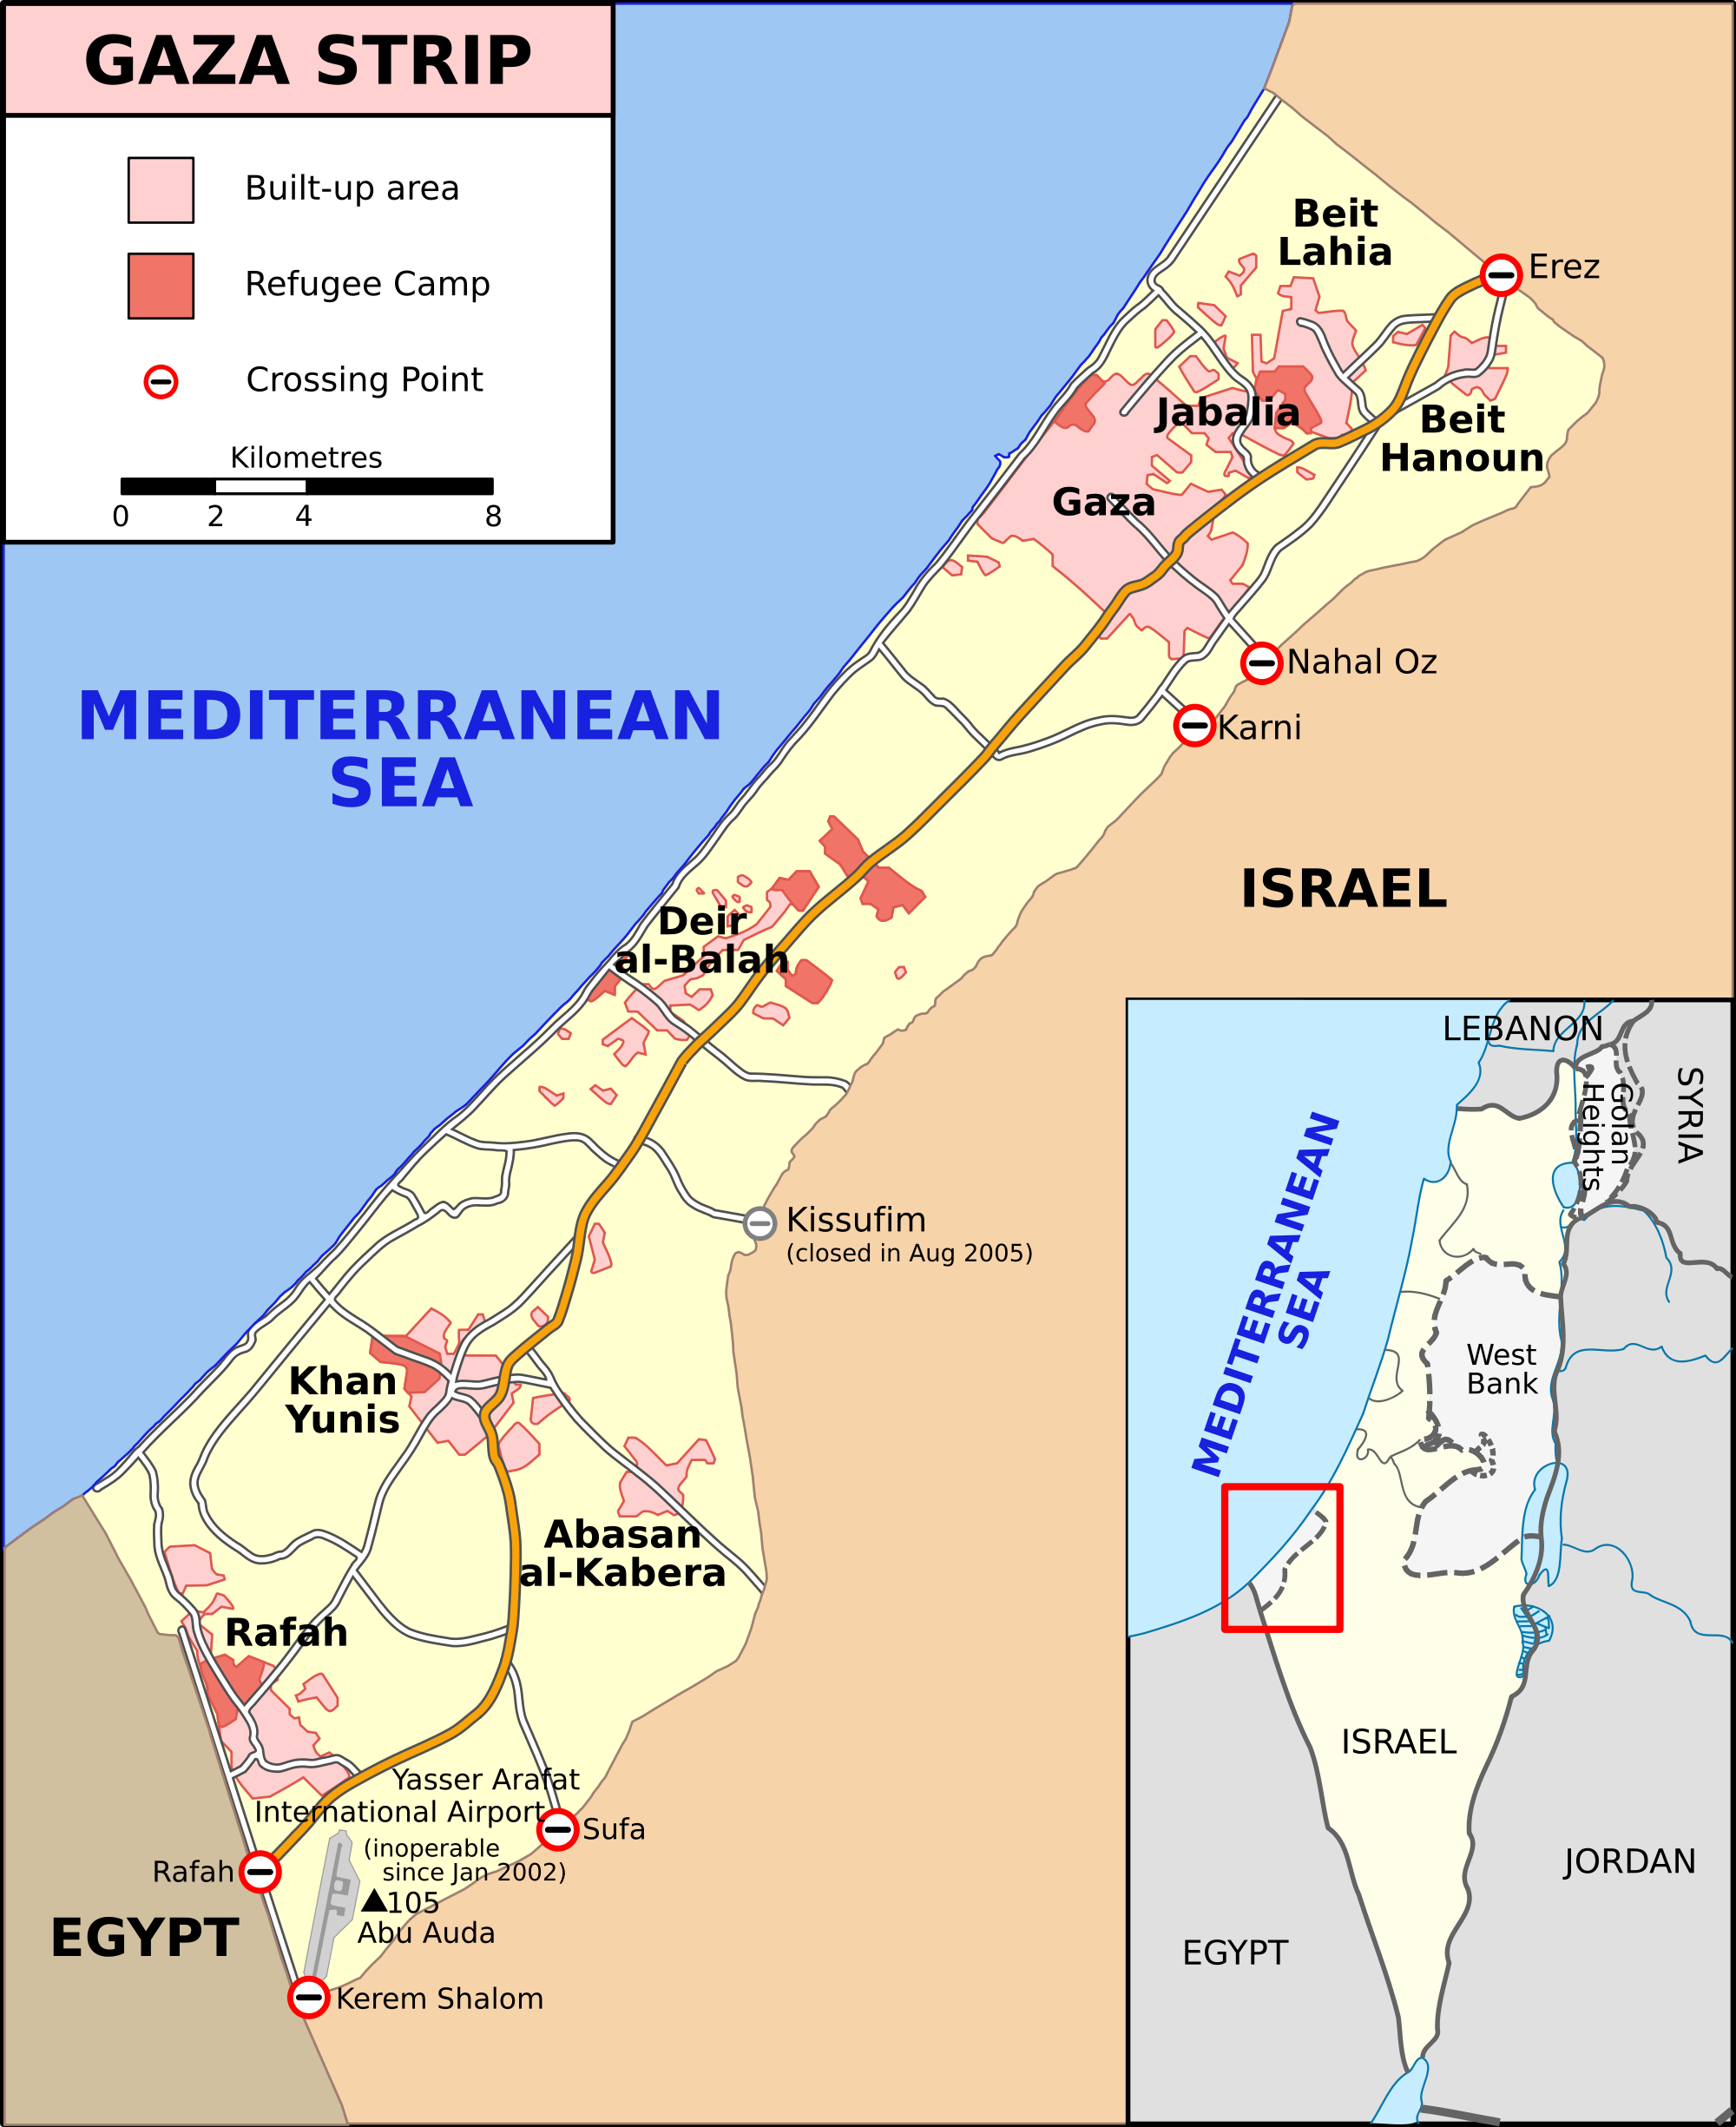 History of the gaza strip